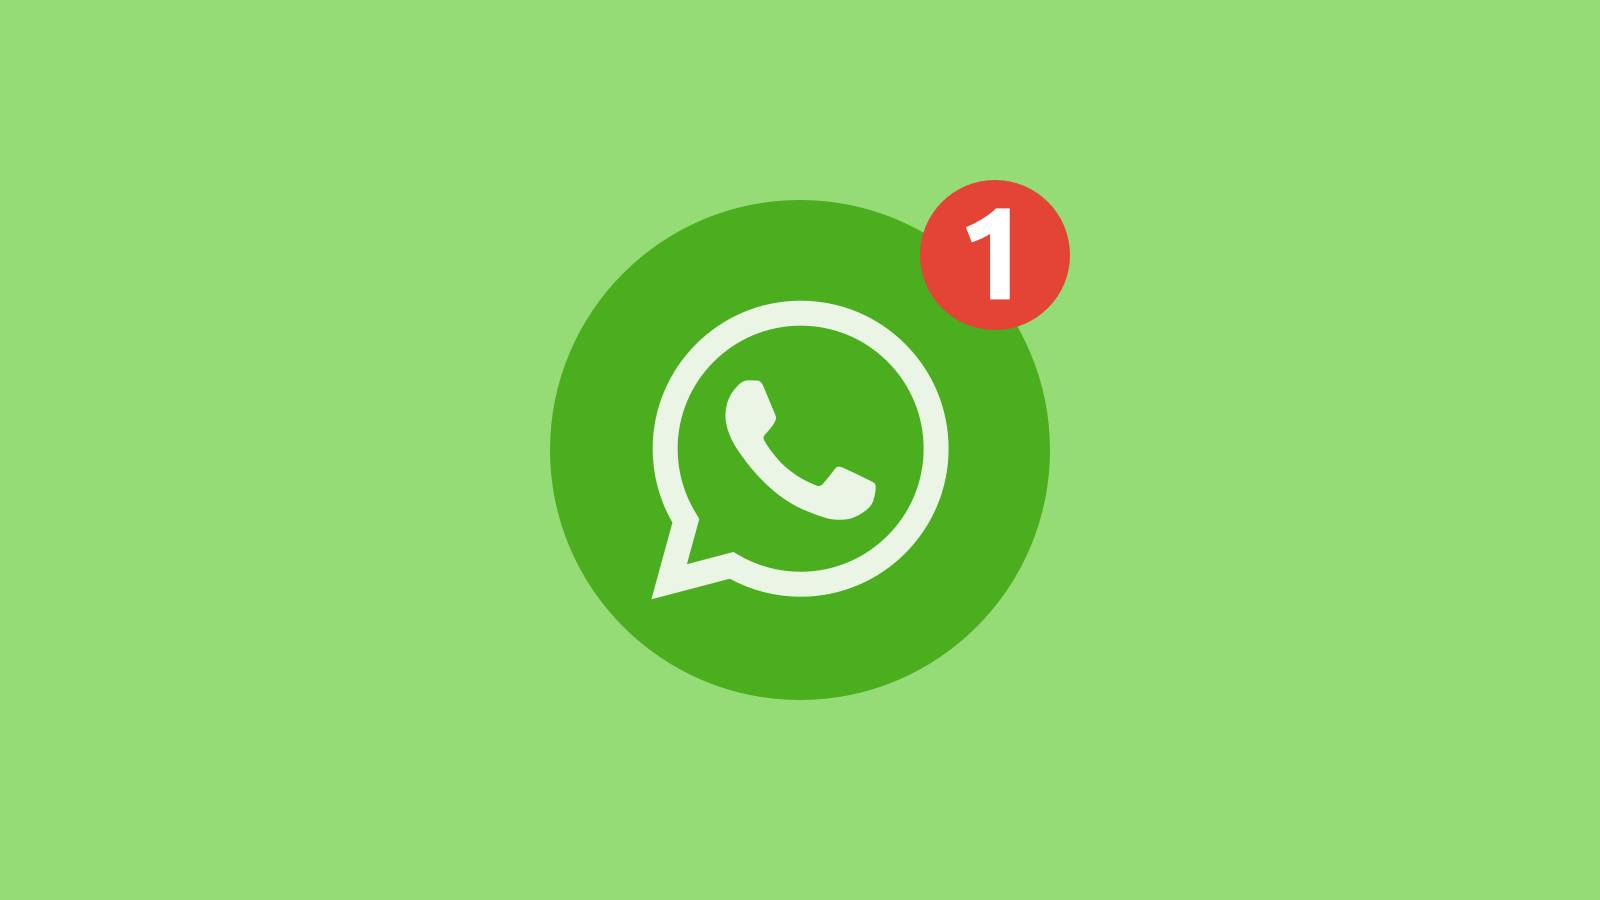 WhatsApp suprapus